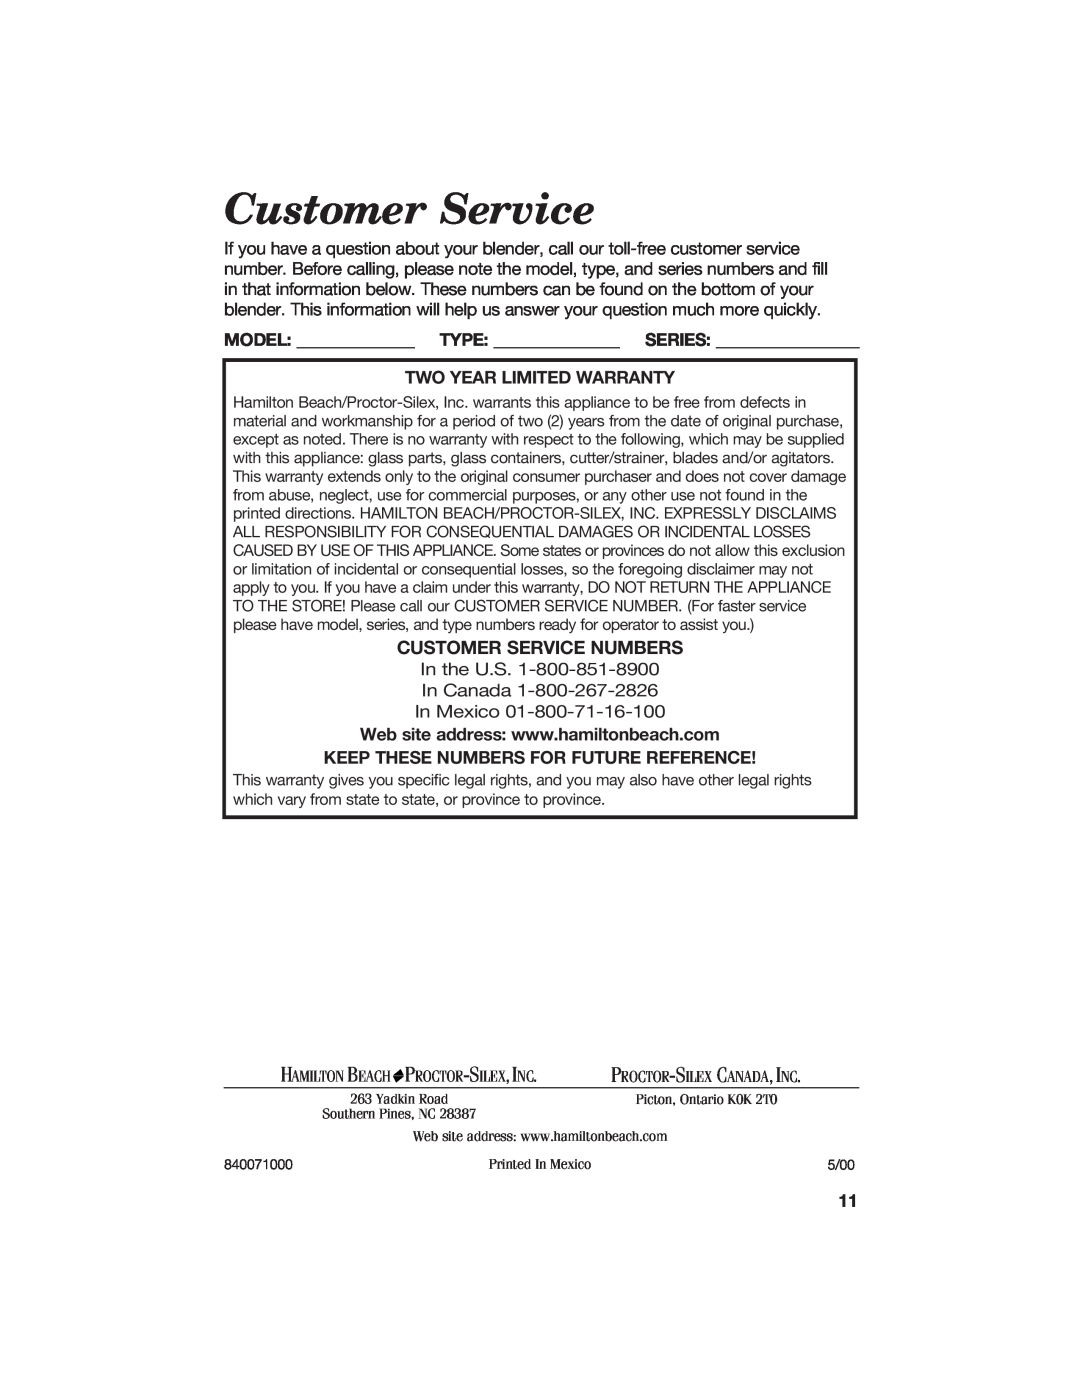 Hamilton Beach 840071000 manual Customer Service Numbers, Hamilton Beach, Proctor-Silex,Inc 